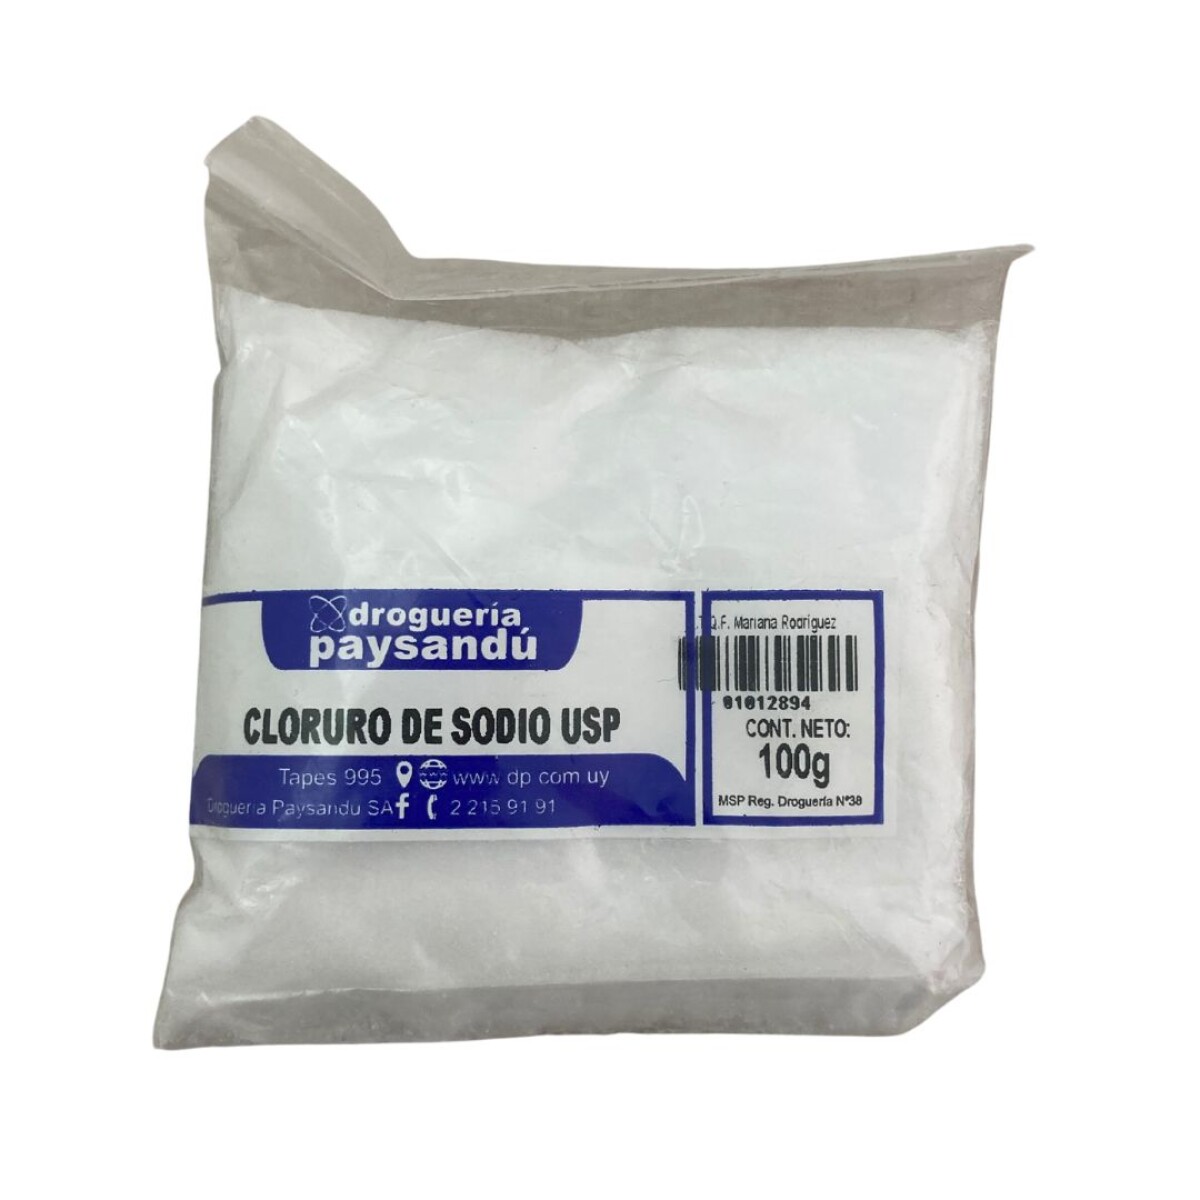 Cloruro de sodio USP - 100 g 